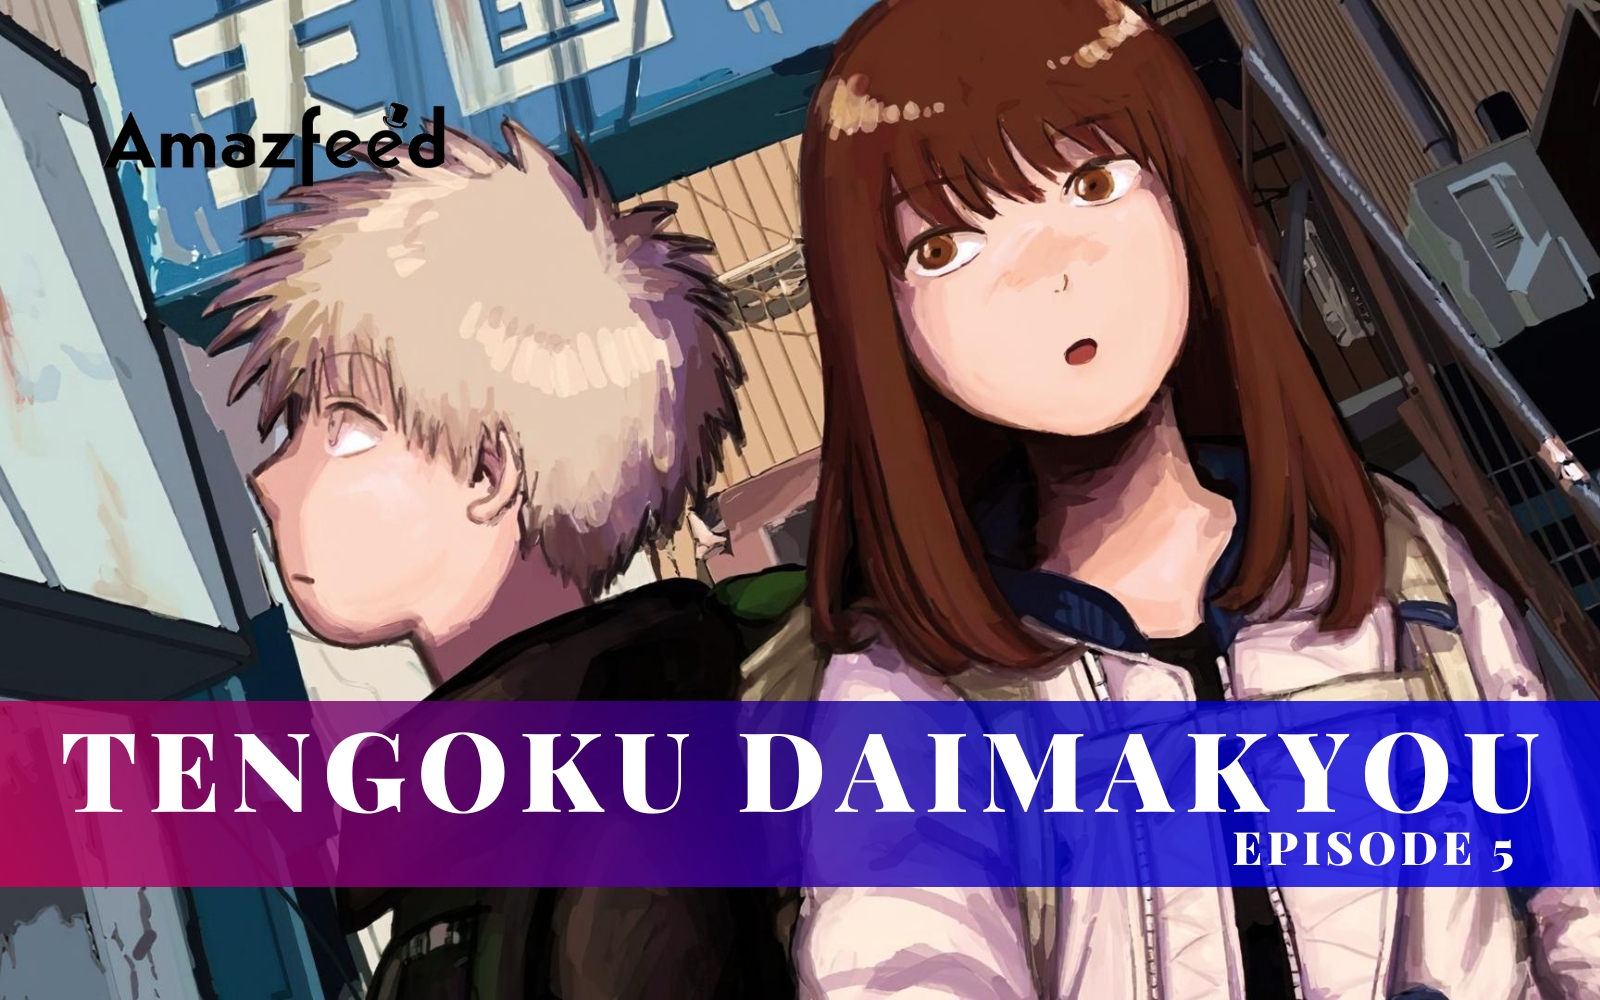 Tengoku Daimakyou Episode 6 - Release Date, Overview, Cast